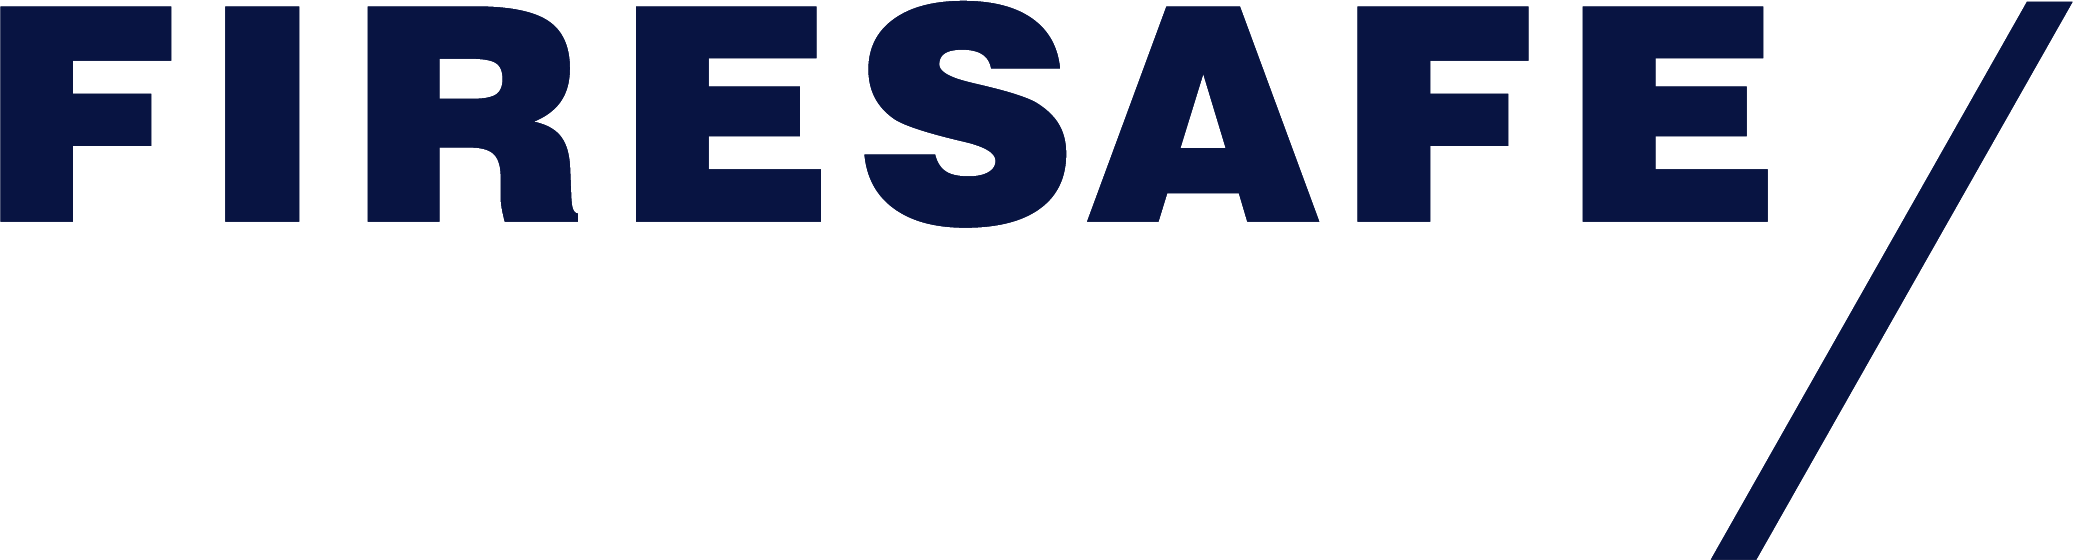 Firesafe logo